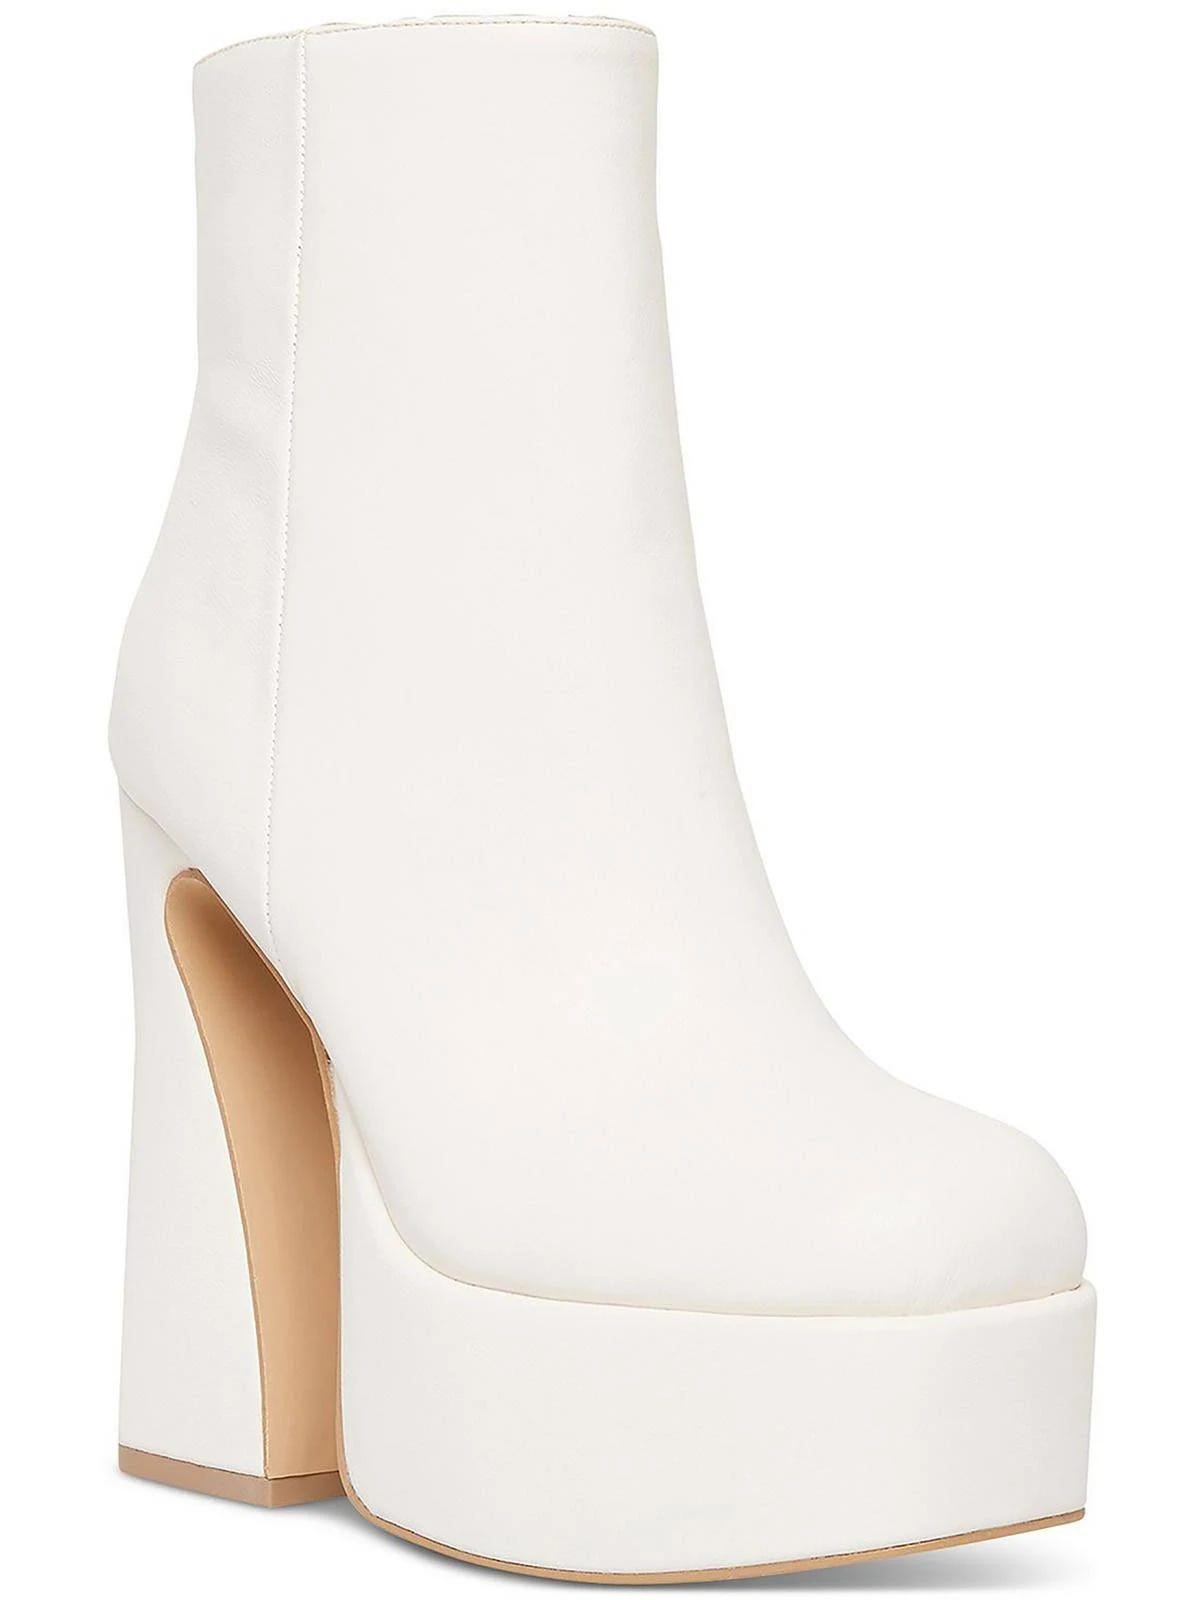 White Heel Boots for Women: Stylish and Comfortable Madden Girl Kourtt Design | Image